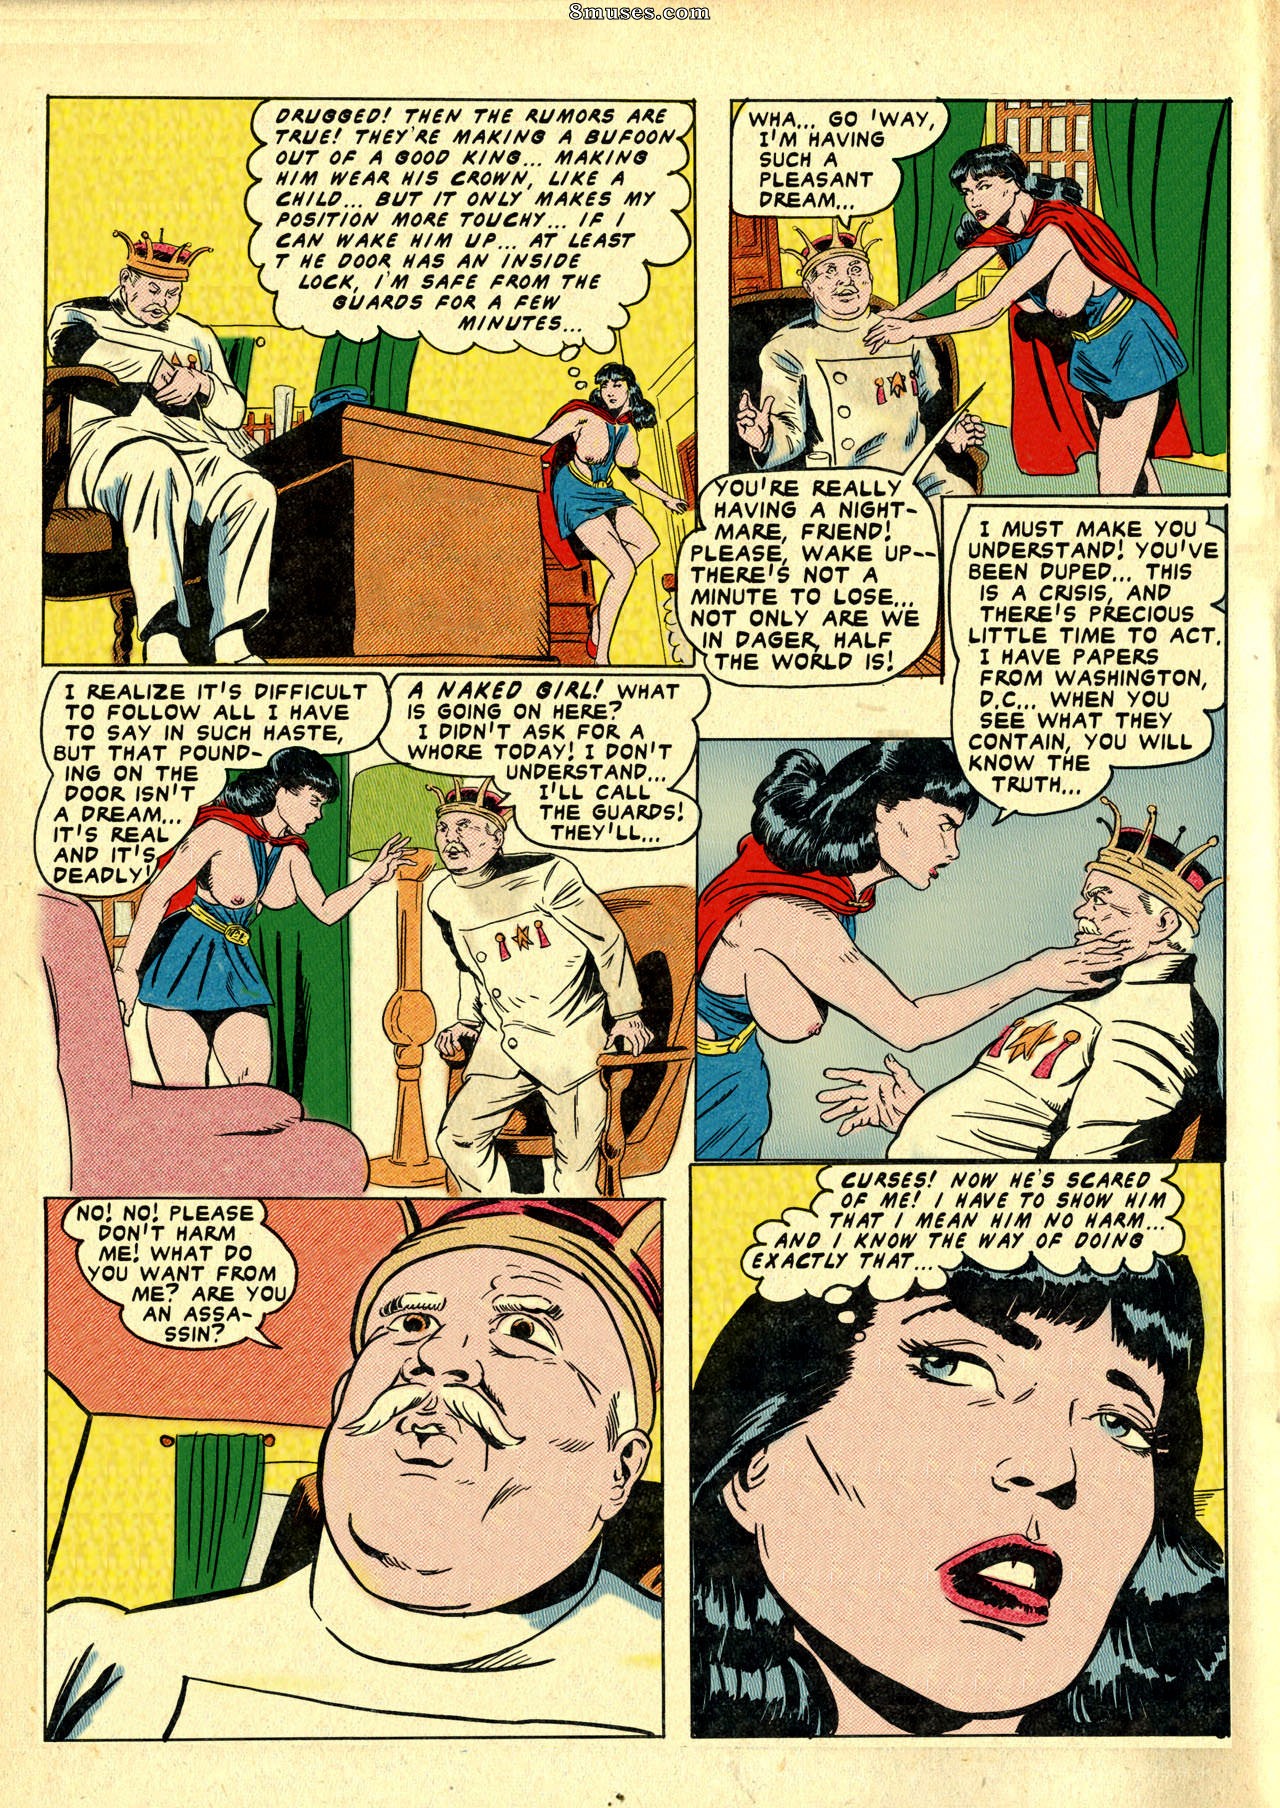 Drugged Cartoon Sex - Phantom Lady Issue 1 - 8muses Comics - Sex Comics and Porn Cartoons